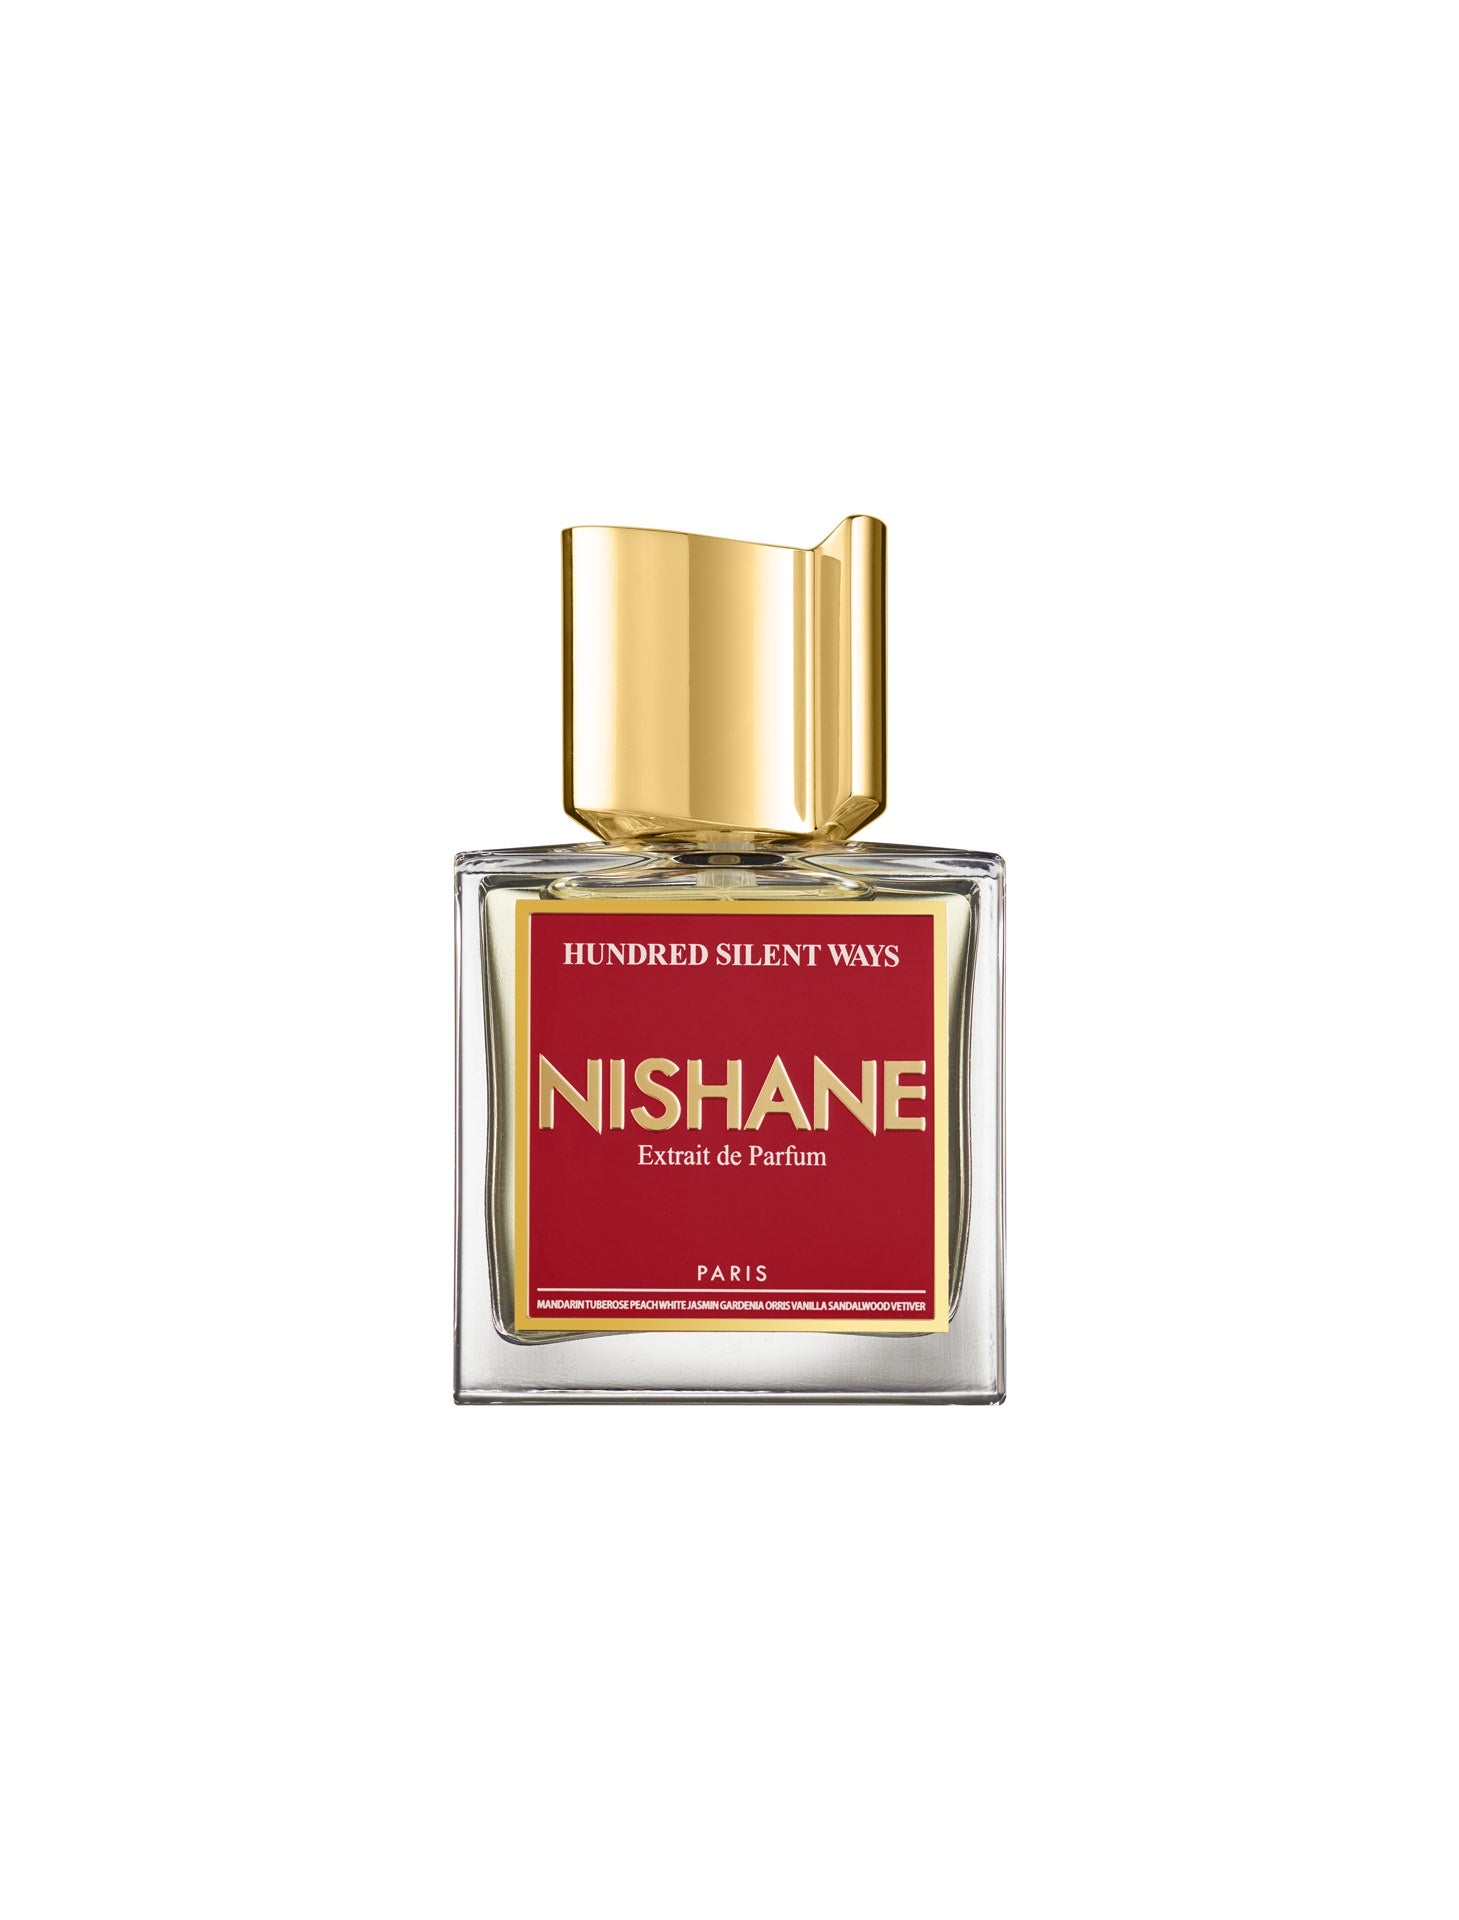 Nishane Hundred Silent Ways 50ml Extrait de Parfum